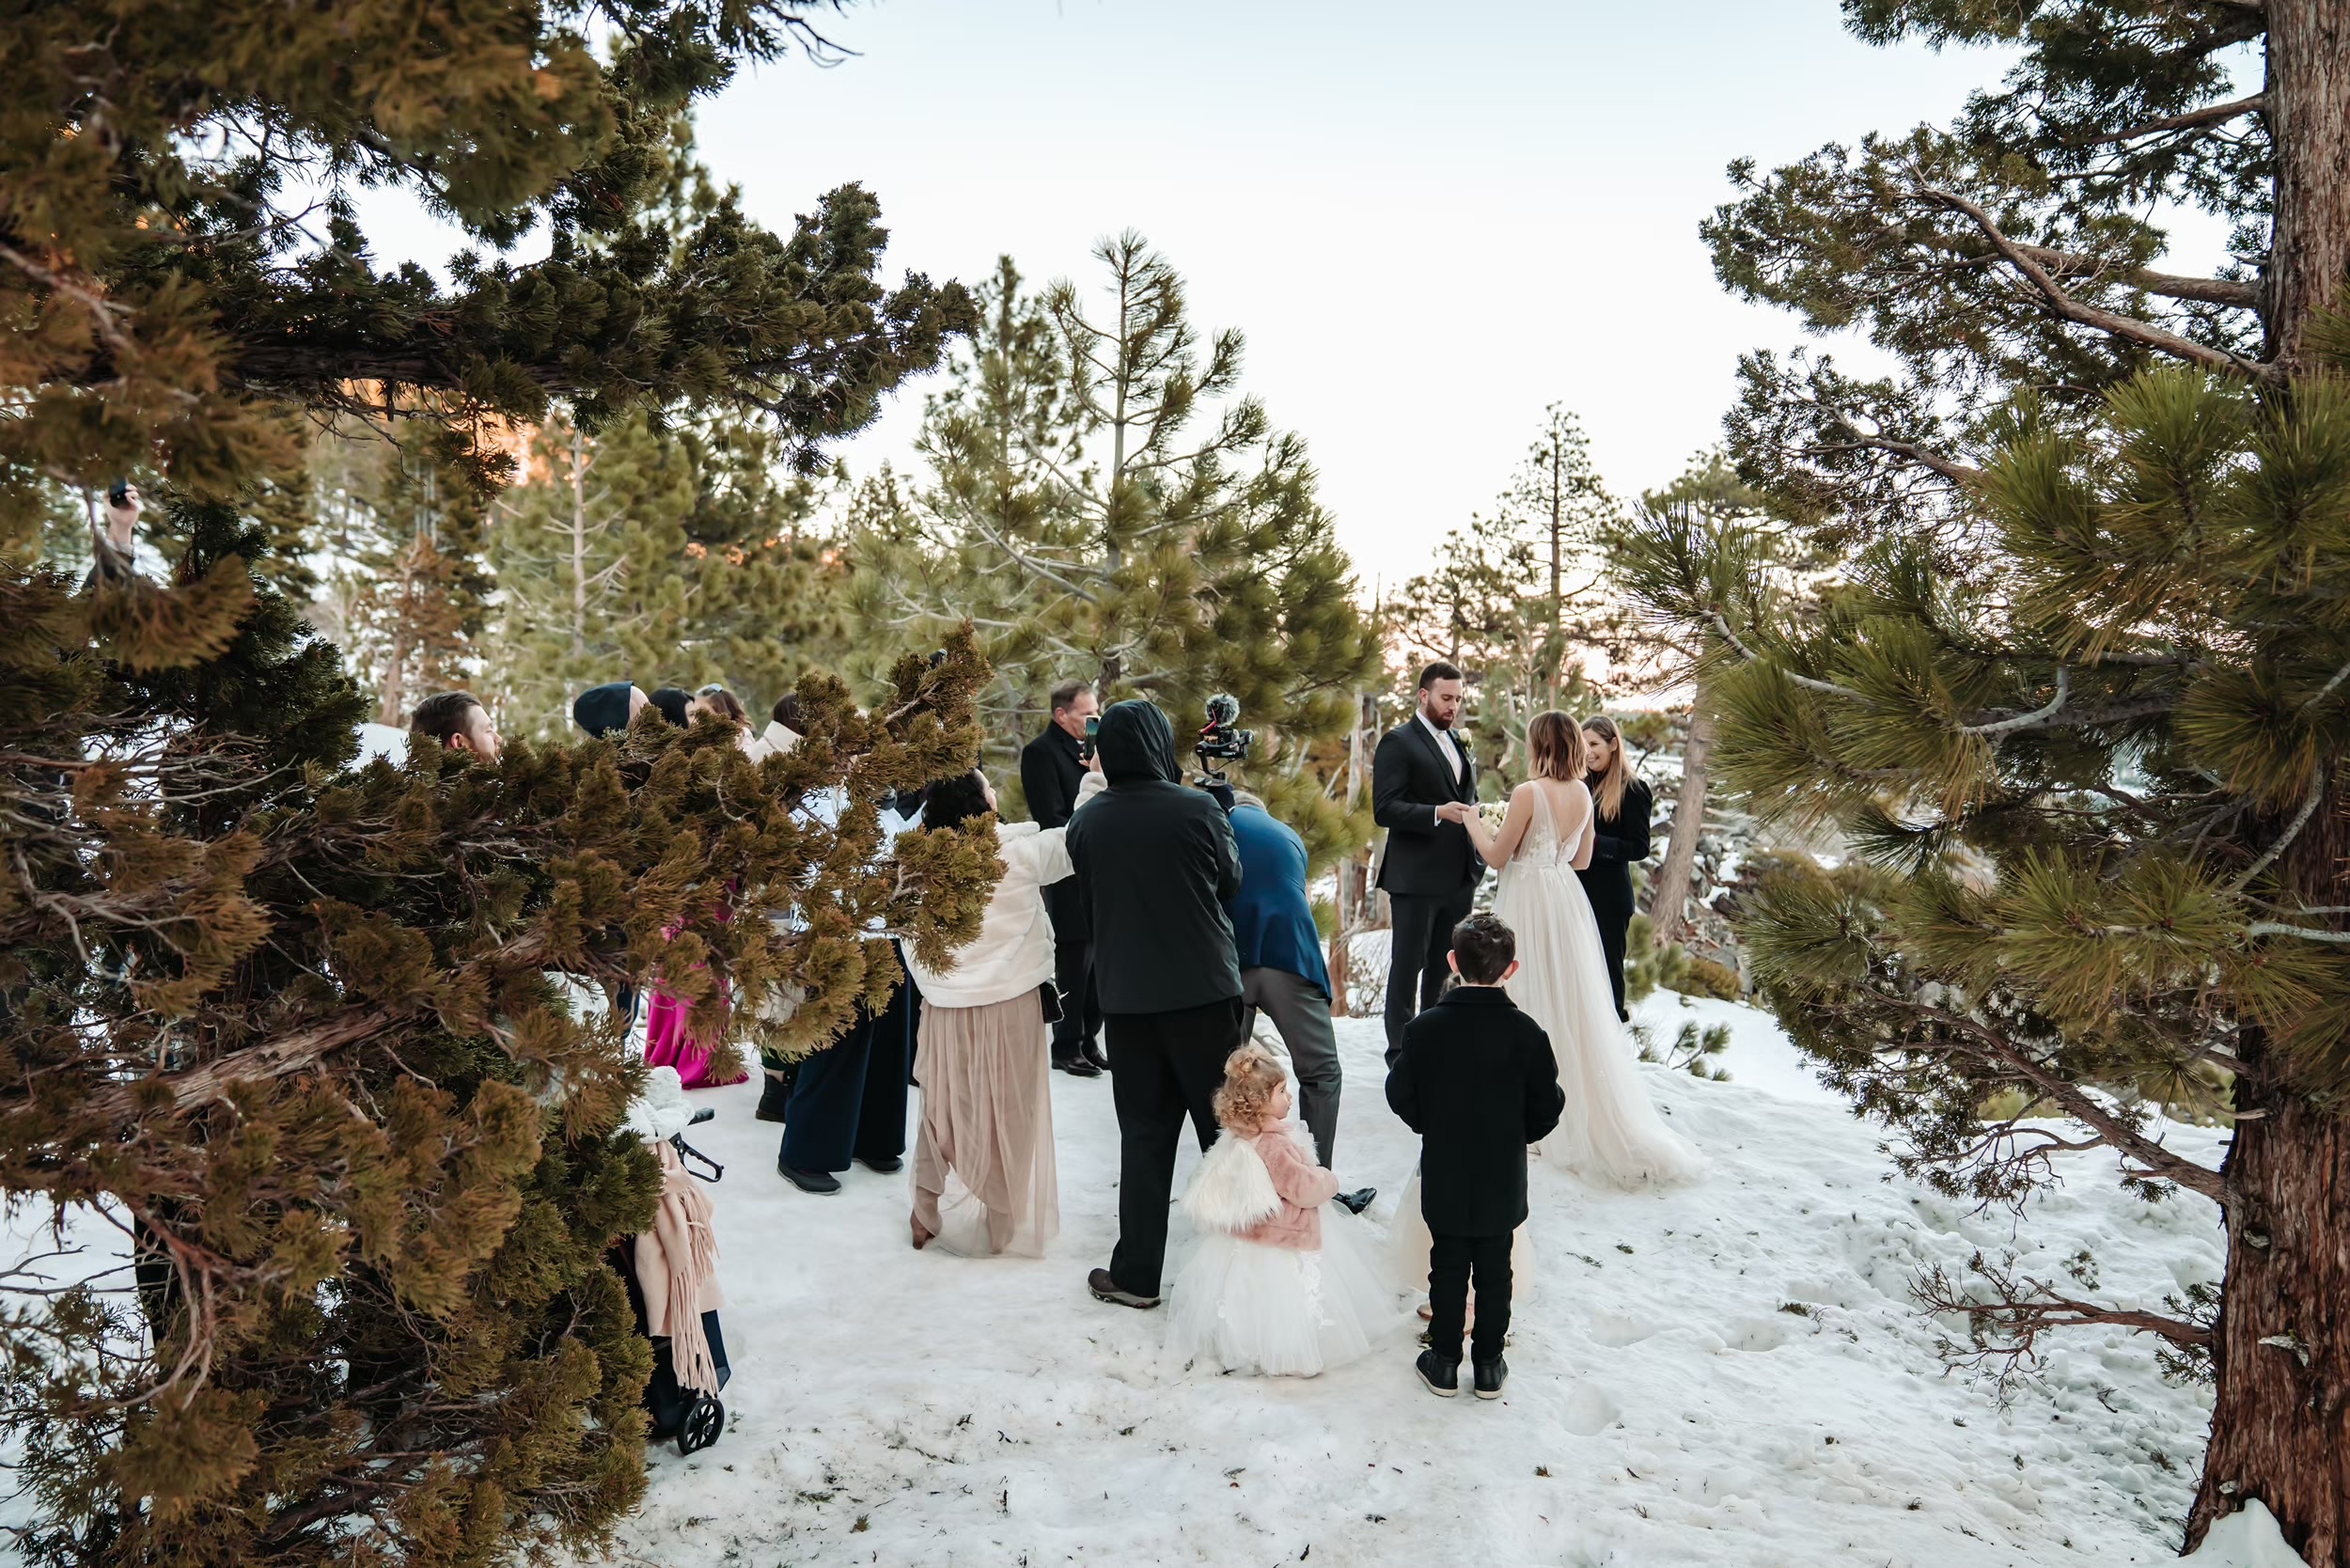 Lake Tahoe elopement photographer captures snowy elopement